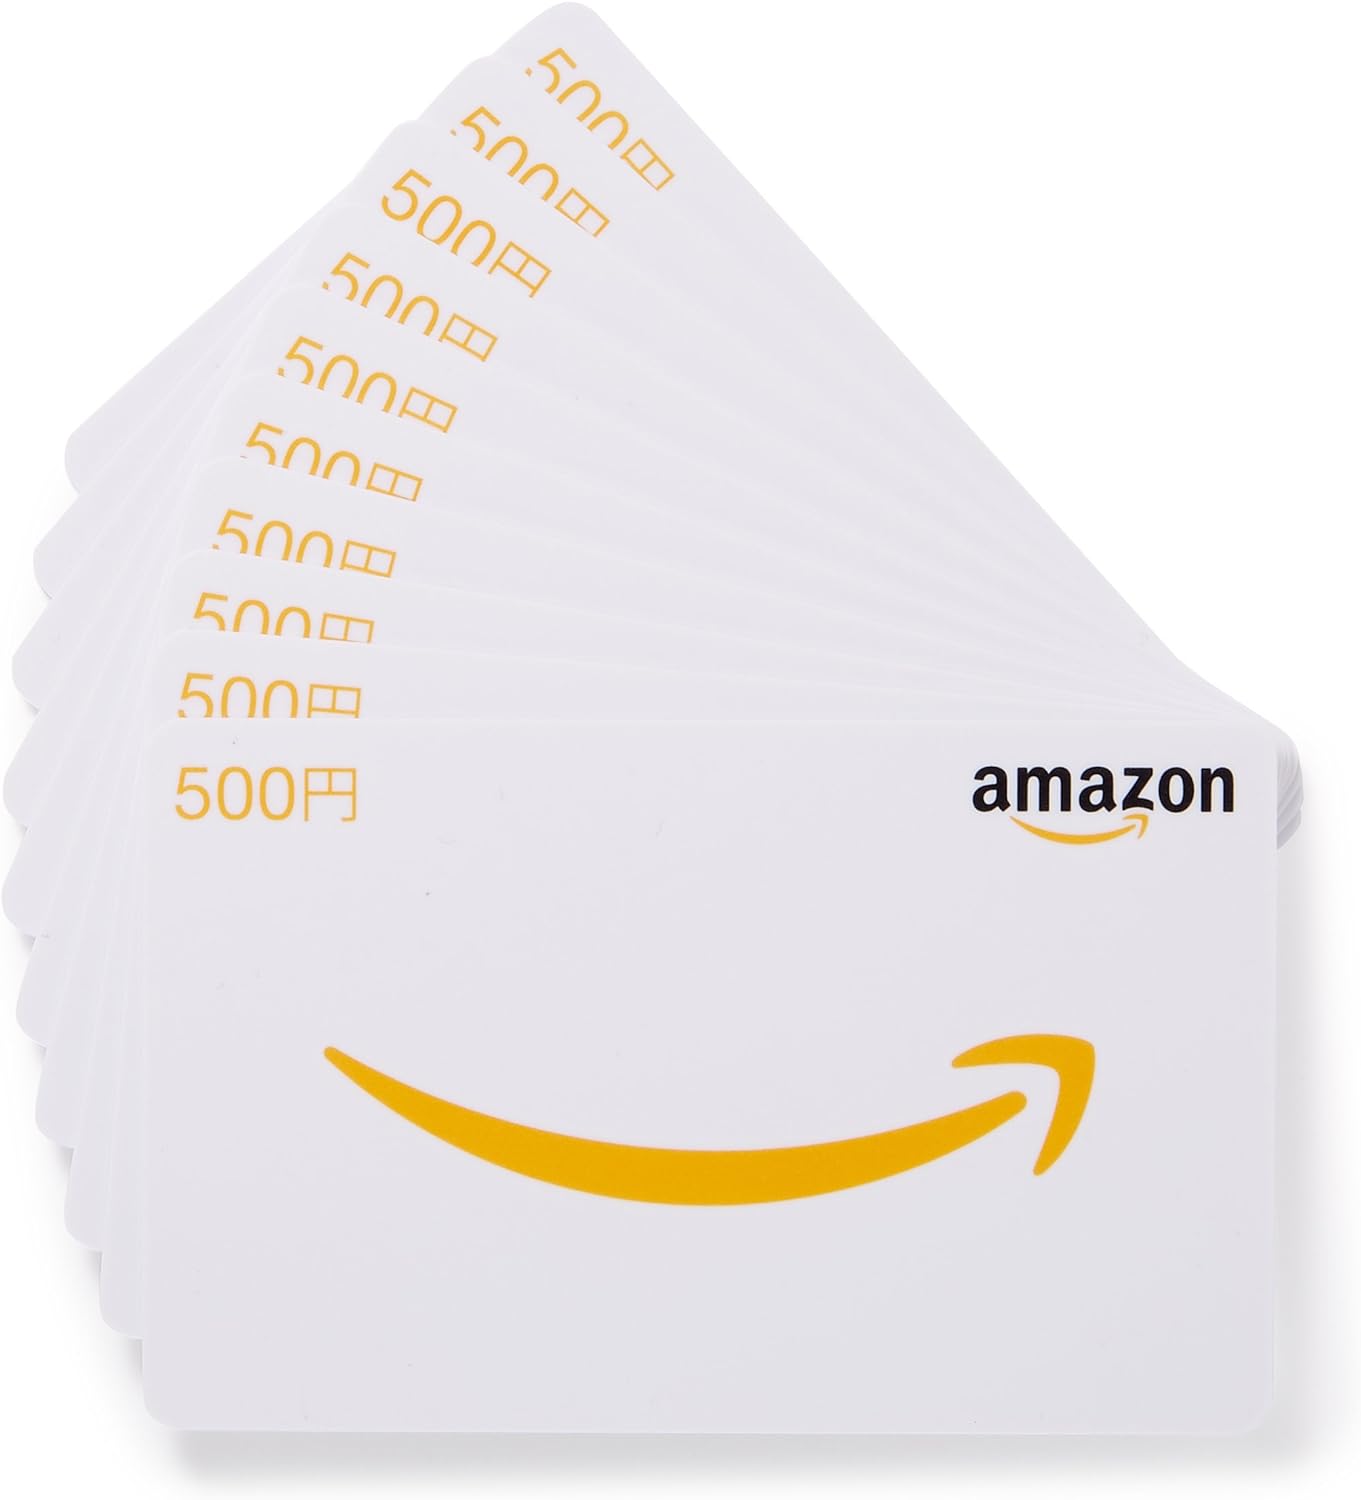 Amazonギフトカード(マルチパック)